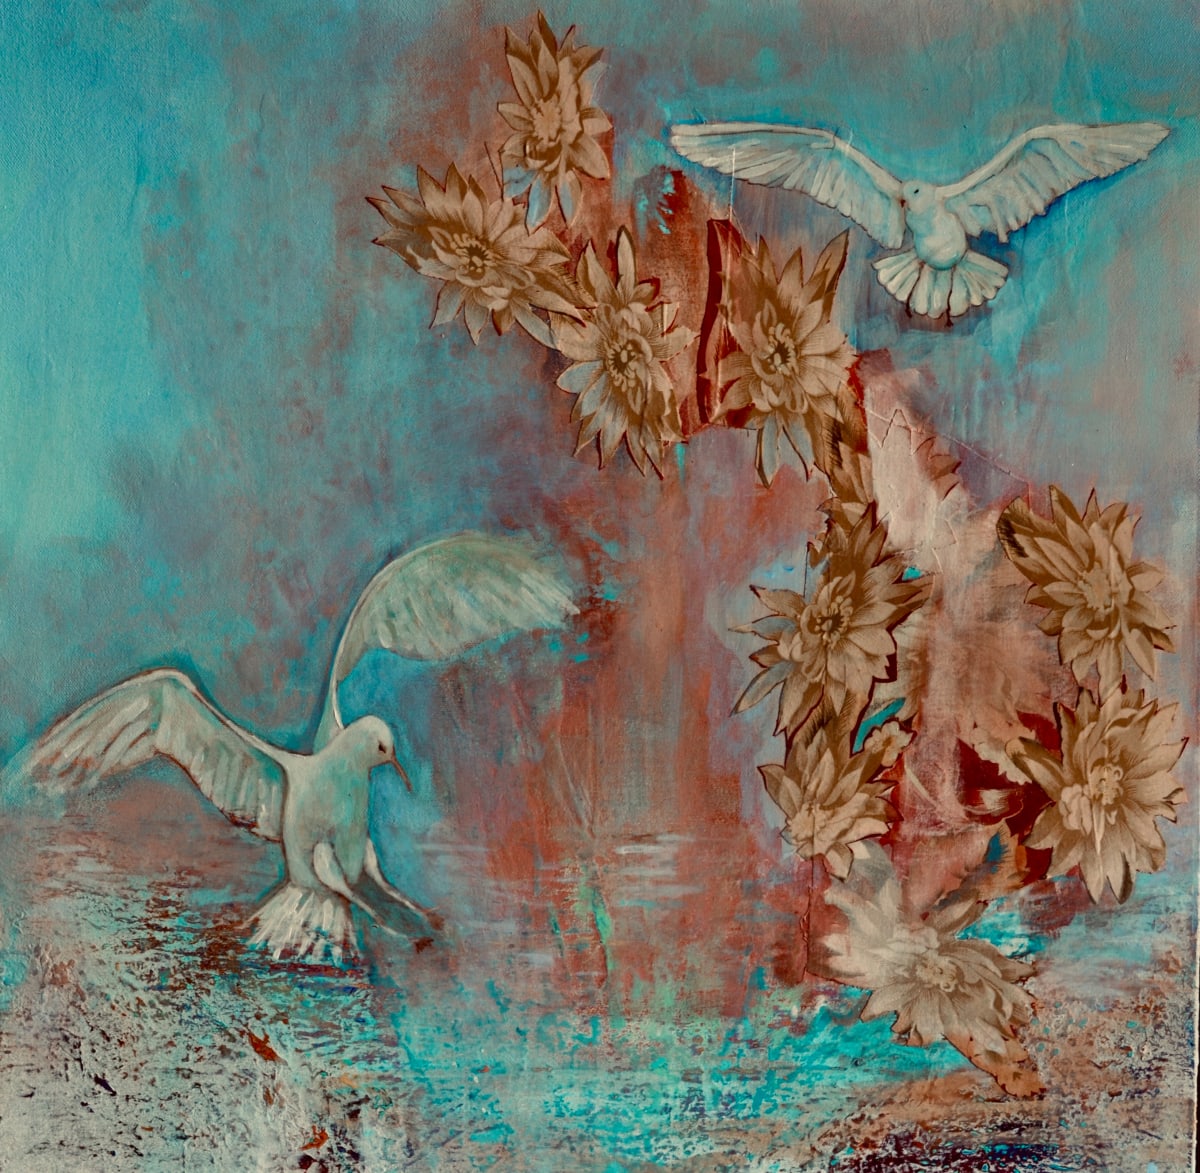 Seagulls Alight II by Harriet Godbole 